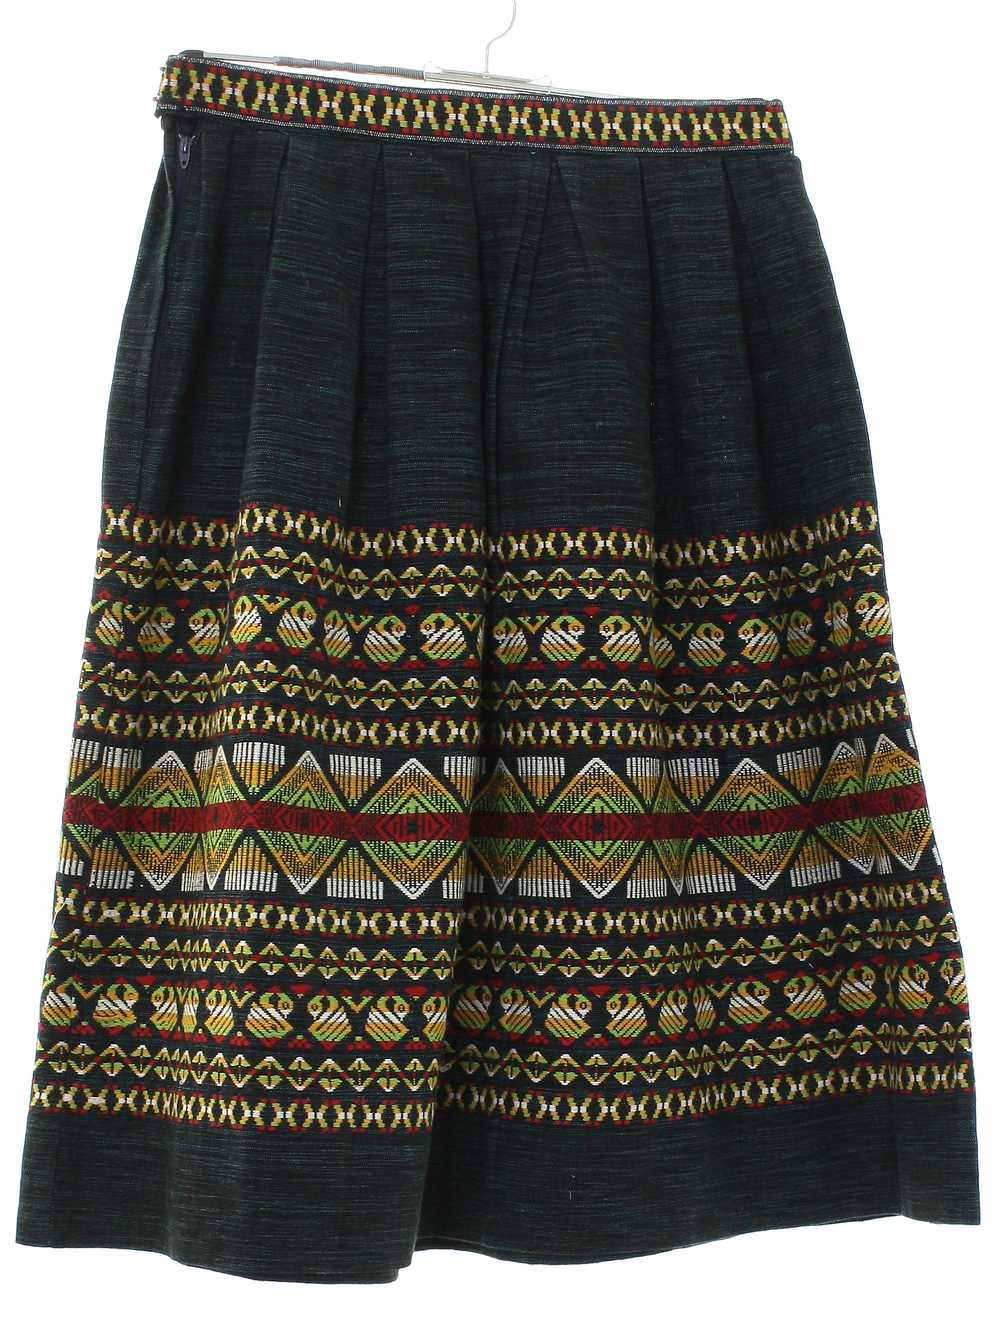 1970's Guatemalan Style Skirt - image 3